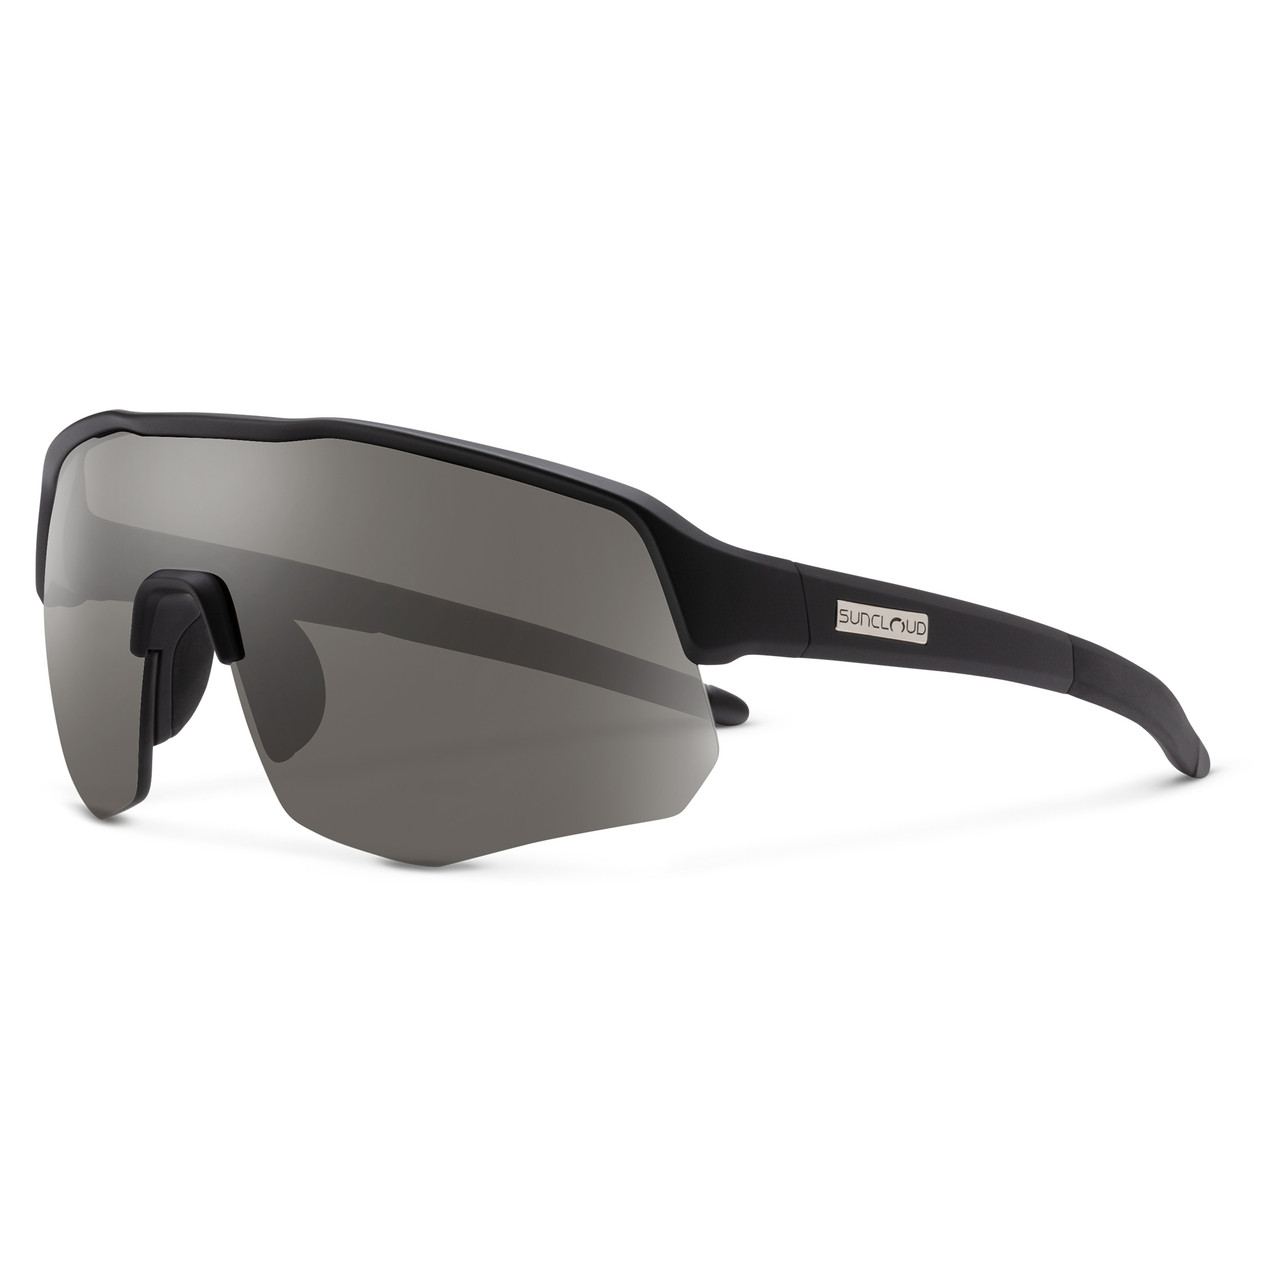 Profile View of Suncloud Cadence Pit Viper Style Semi-Rimless Sport Shield Sunglasses in Matte Black with Polar Gray